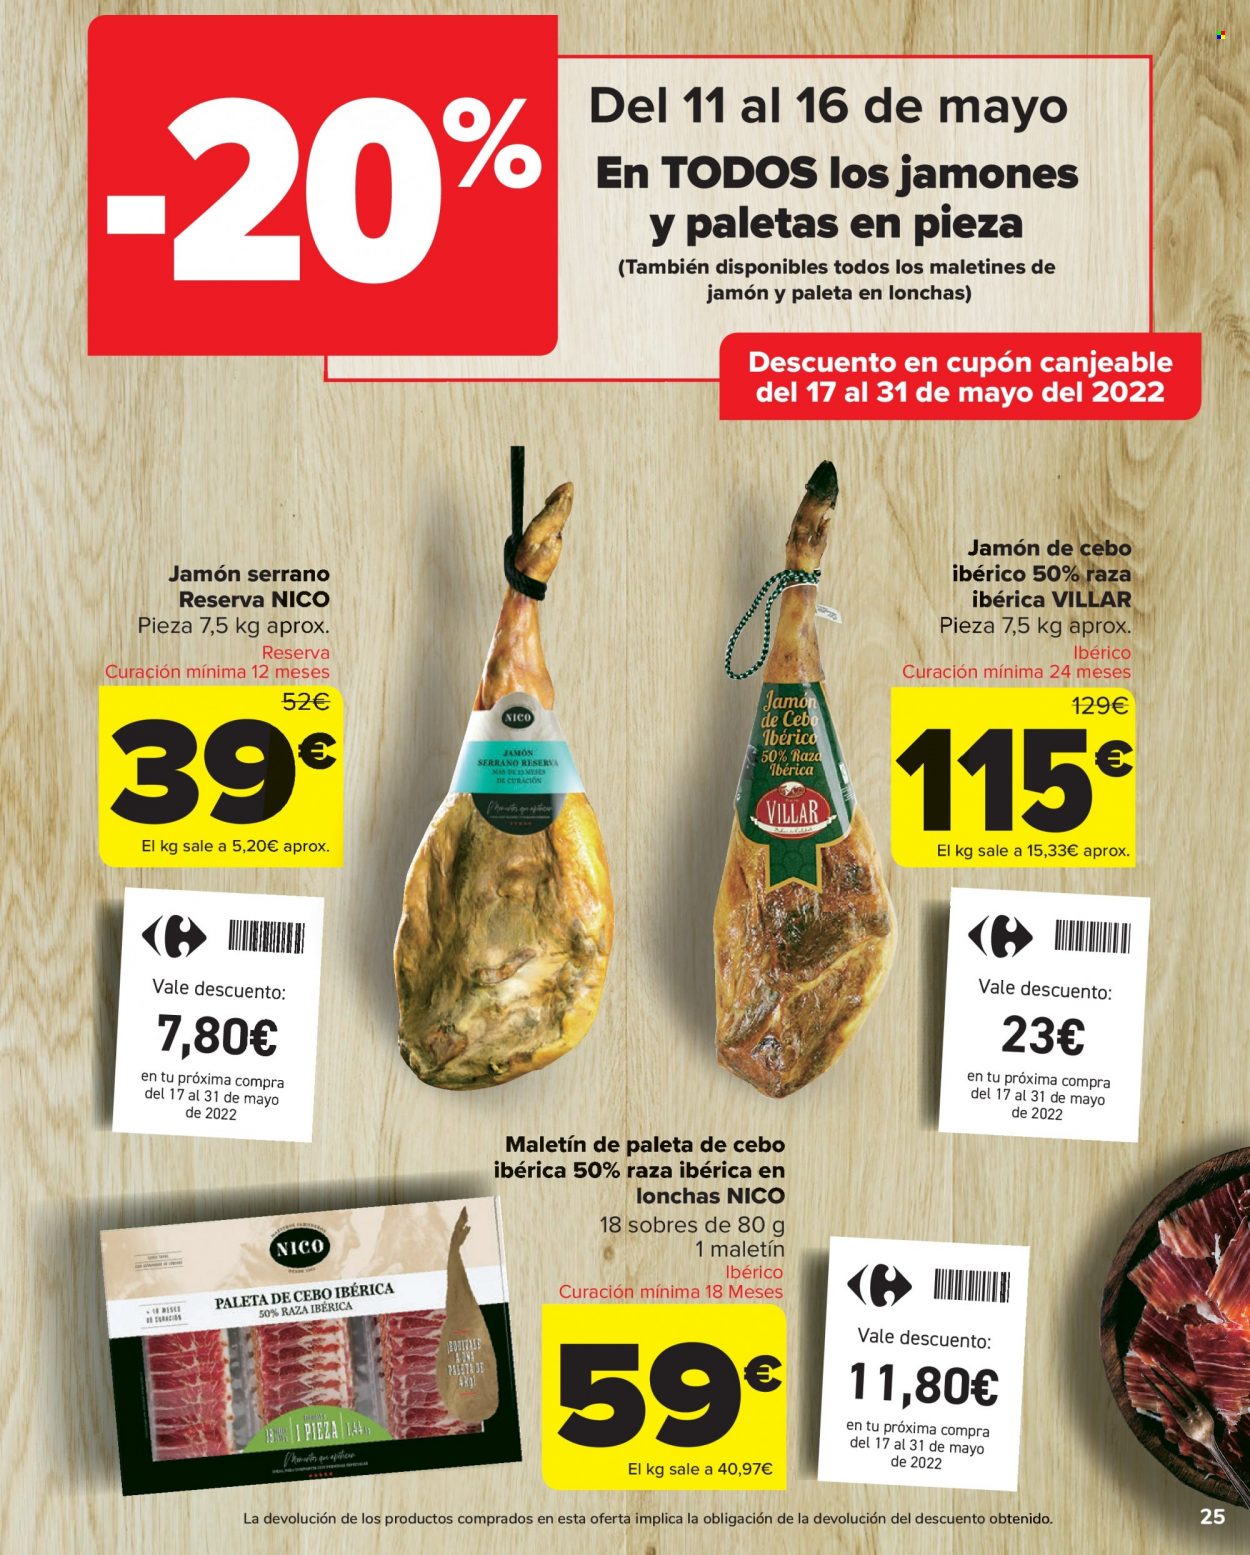 thumbnail - Folleto actual Carrefour - 11/05/22 - 24/05/22 - Ventas - jamón, jamón serrano. Página 25.